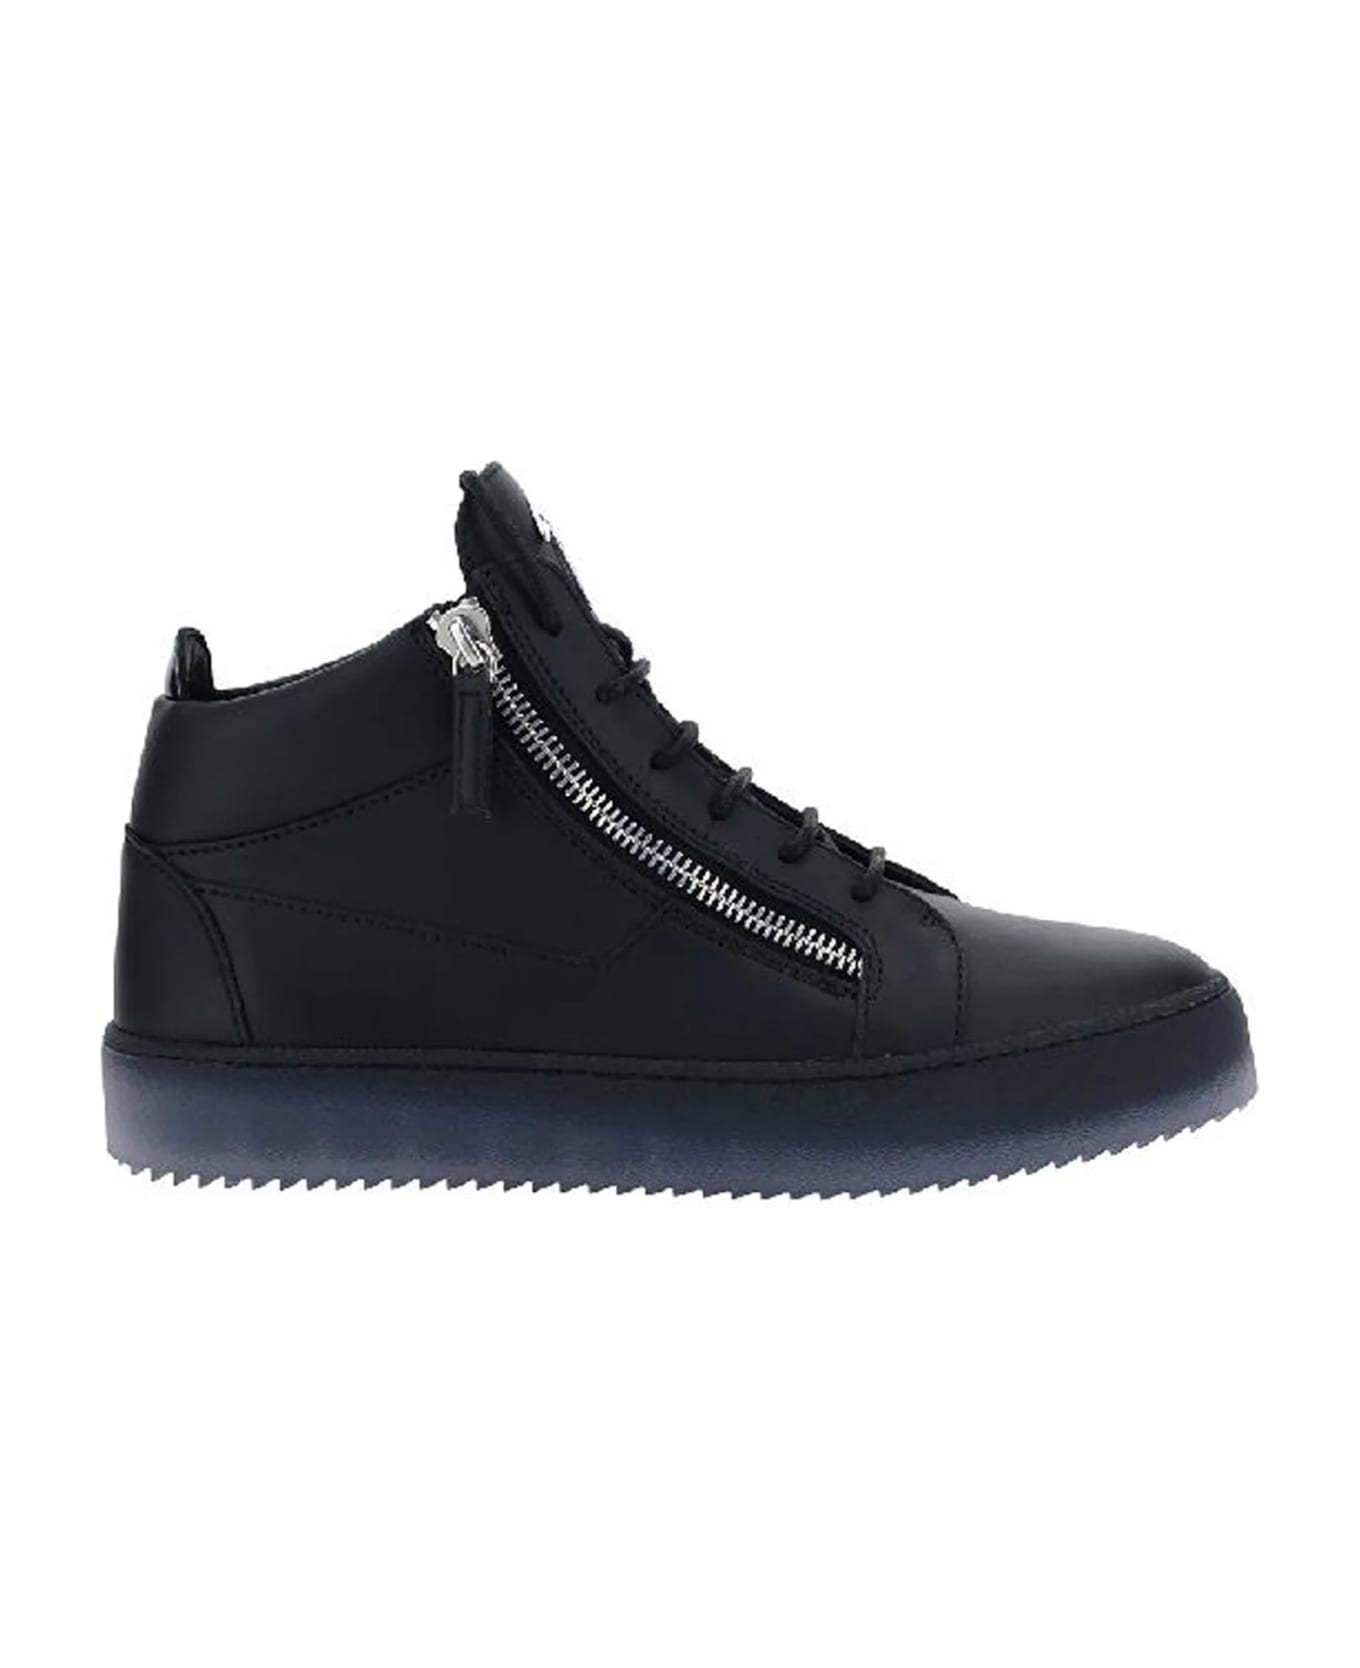 Giuseppe Zanotti May London Sneakers - Black スニーカー